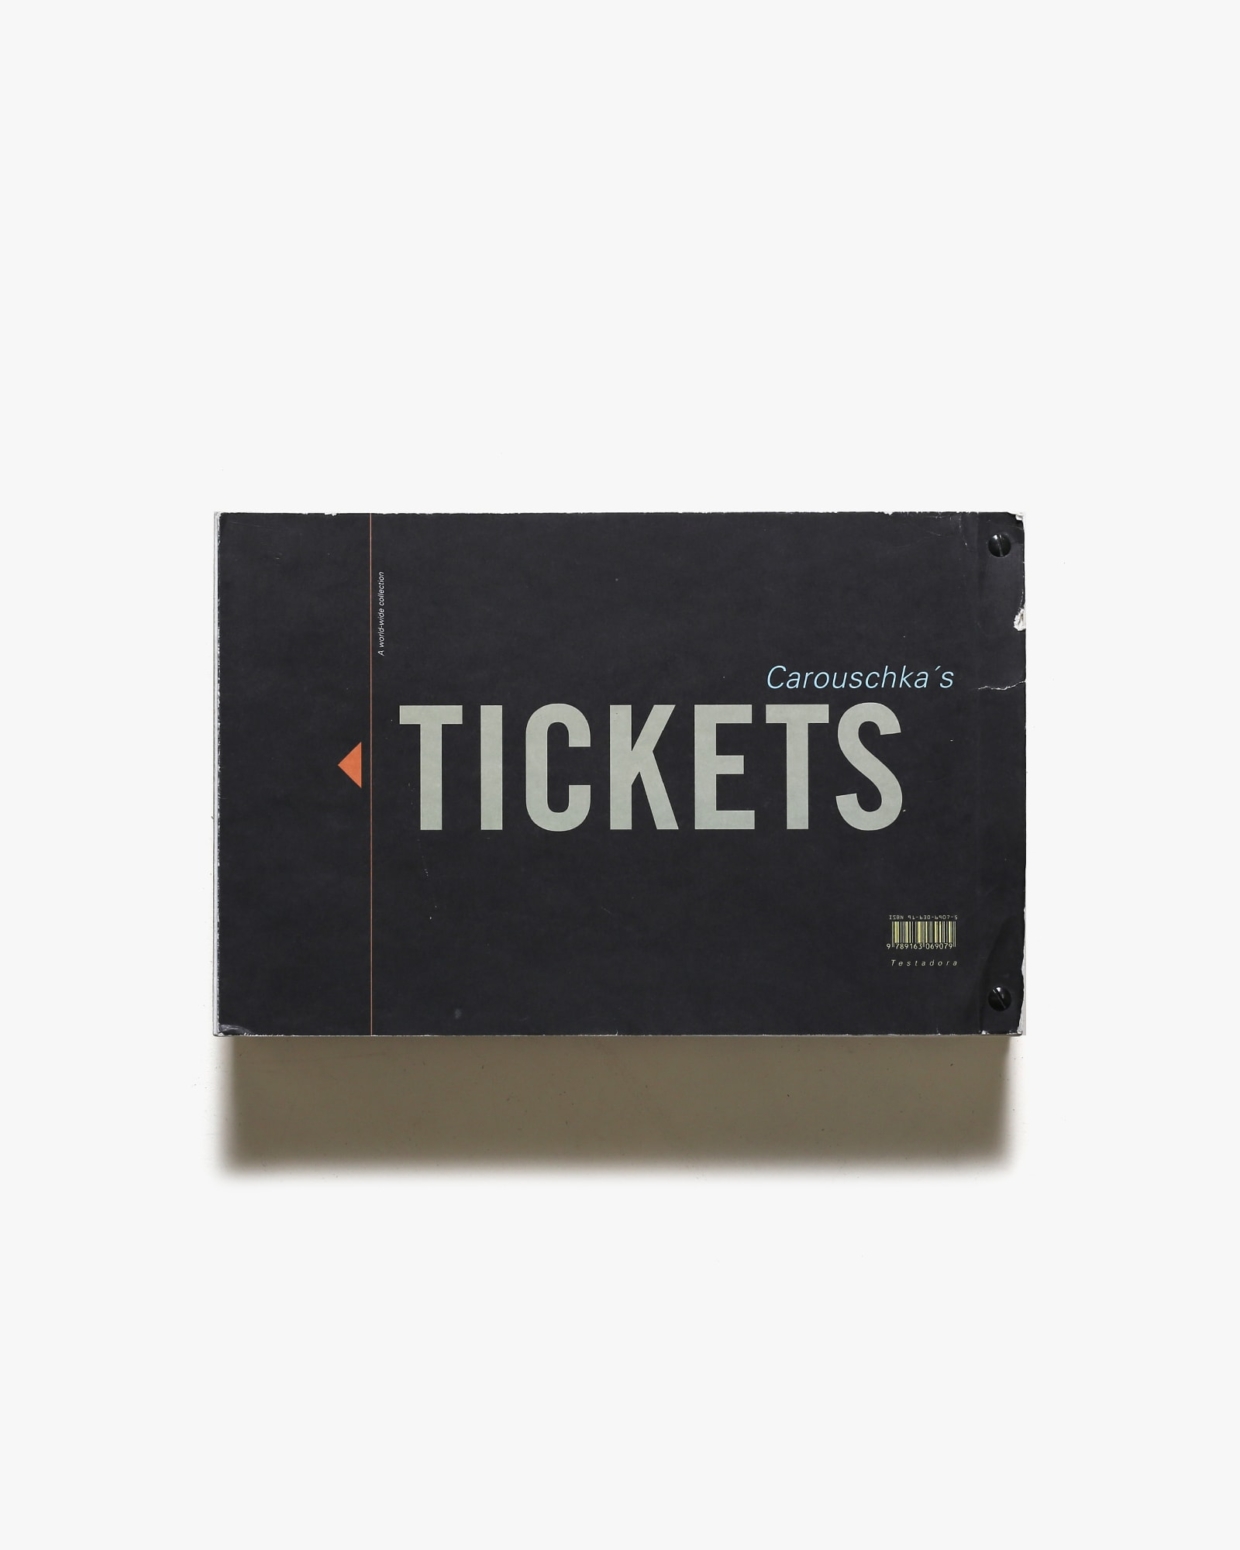 Carouschka’s Tickets | Carouschka Streijffert